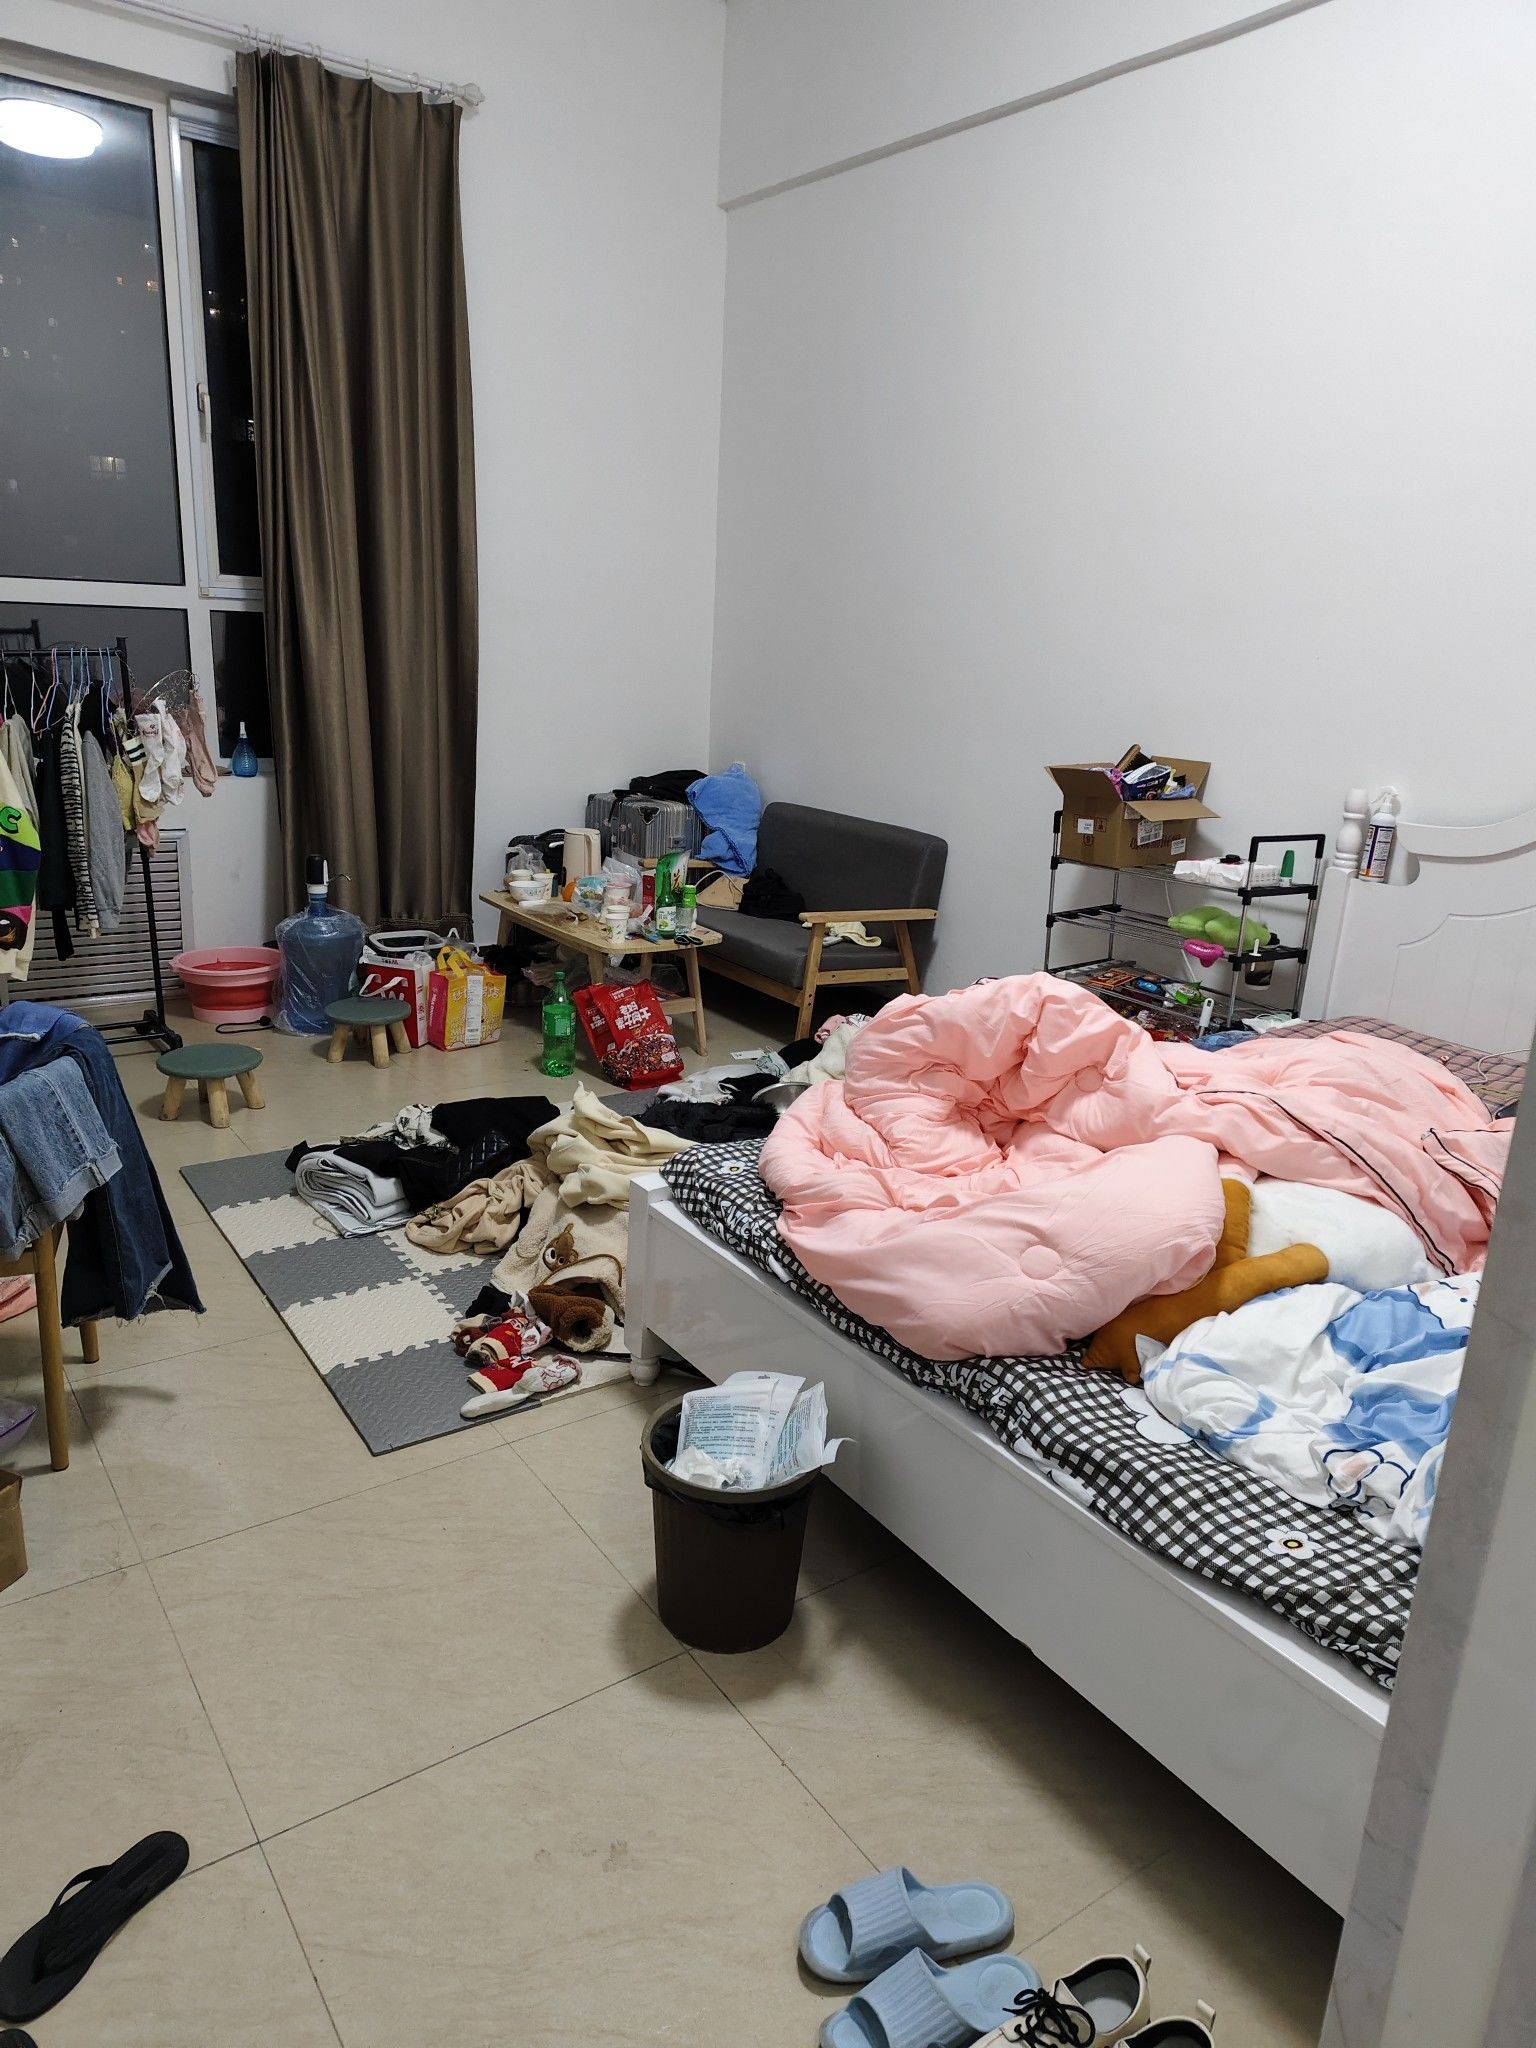 Beijing-Tongzhou-Cozy Home,Clean&Comfy,No Gender Limit,Hustle & Bustle,Chilled,Pet Friendly